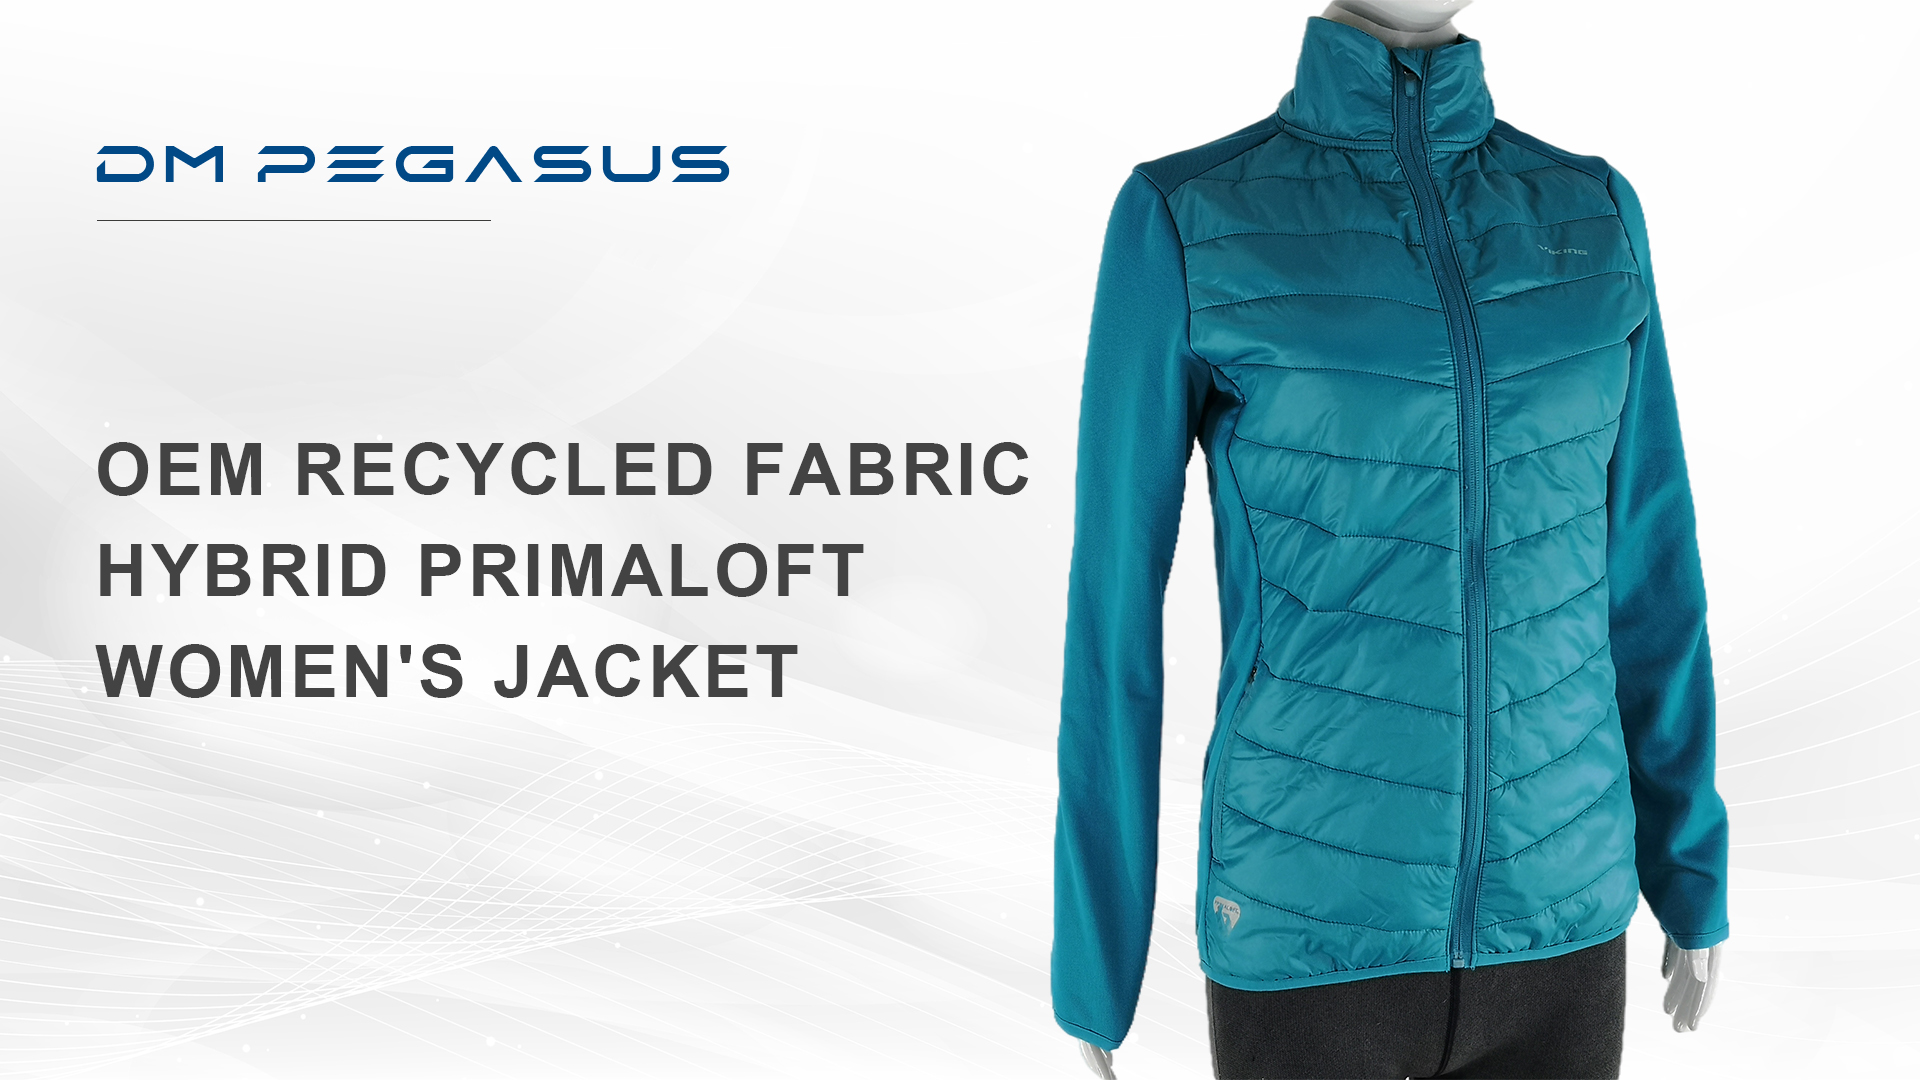 OEM Recycle Fabric Hybrid Primaloft Jacket For Women